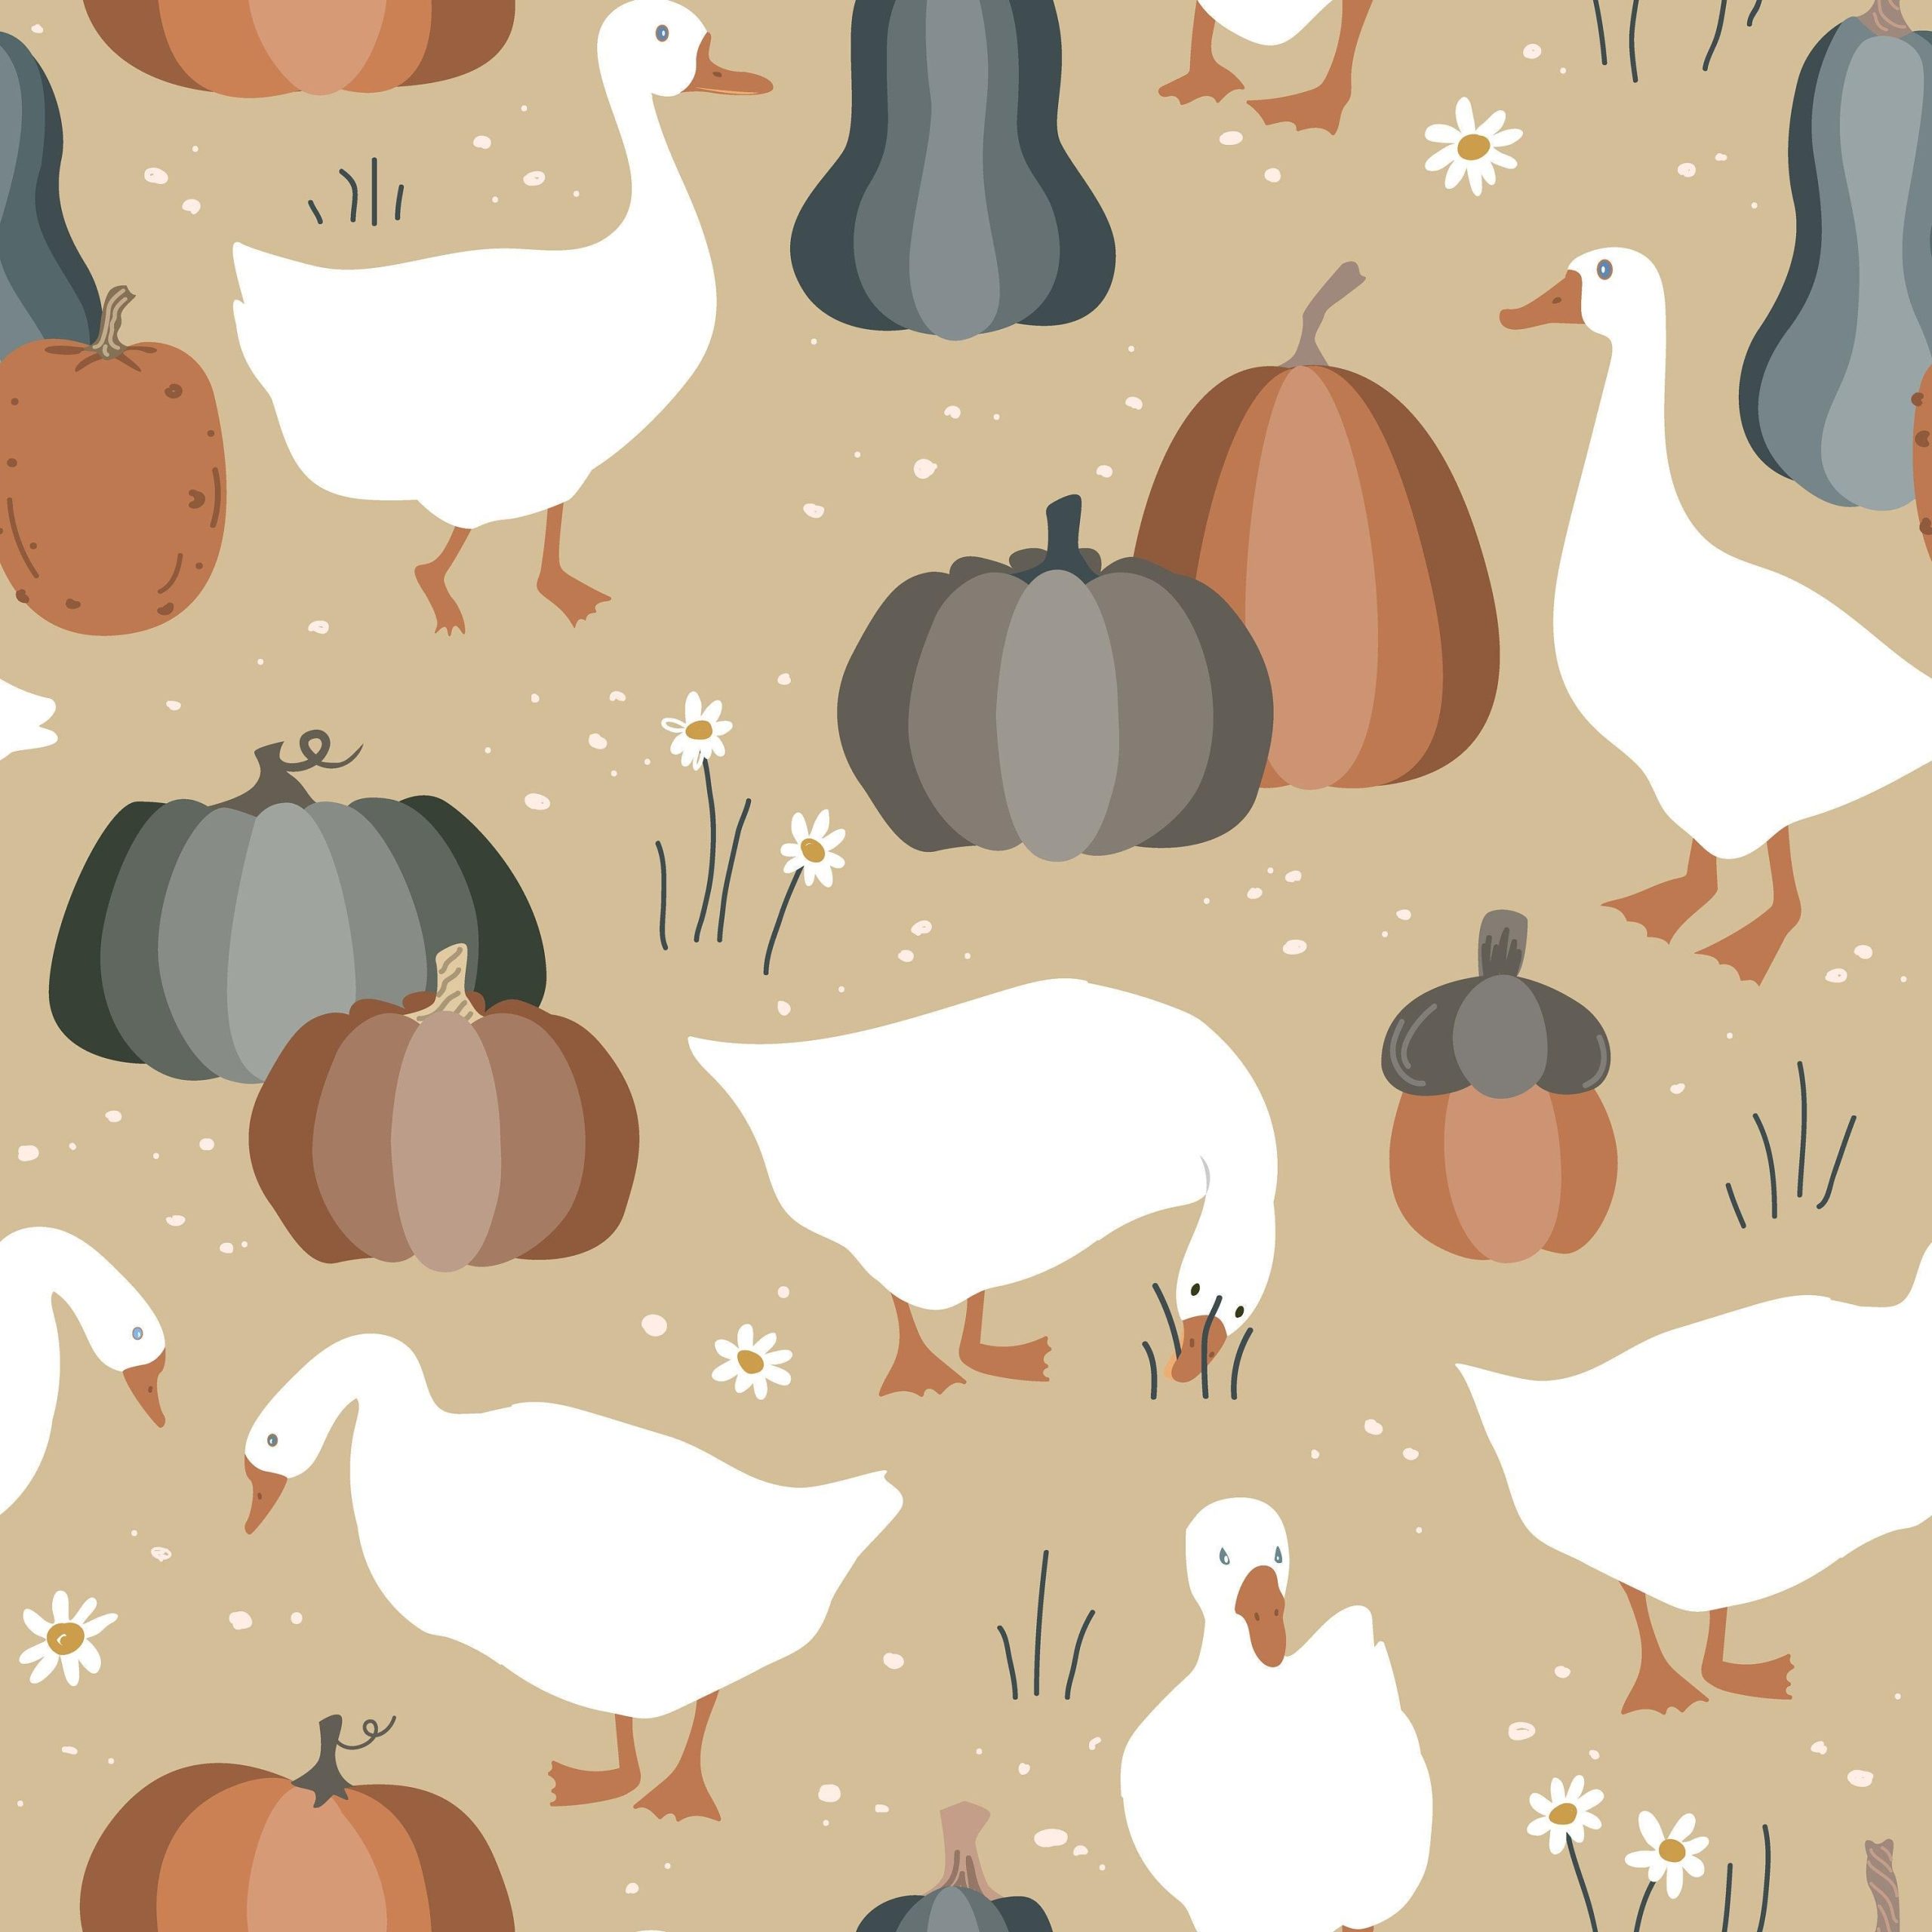 Thanksgiving Patterns 1080p Wallpaper, Thanksgiving Patterns, Holidays